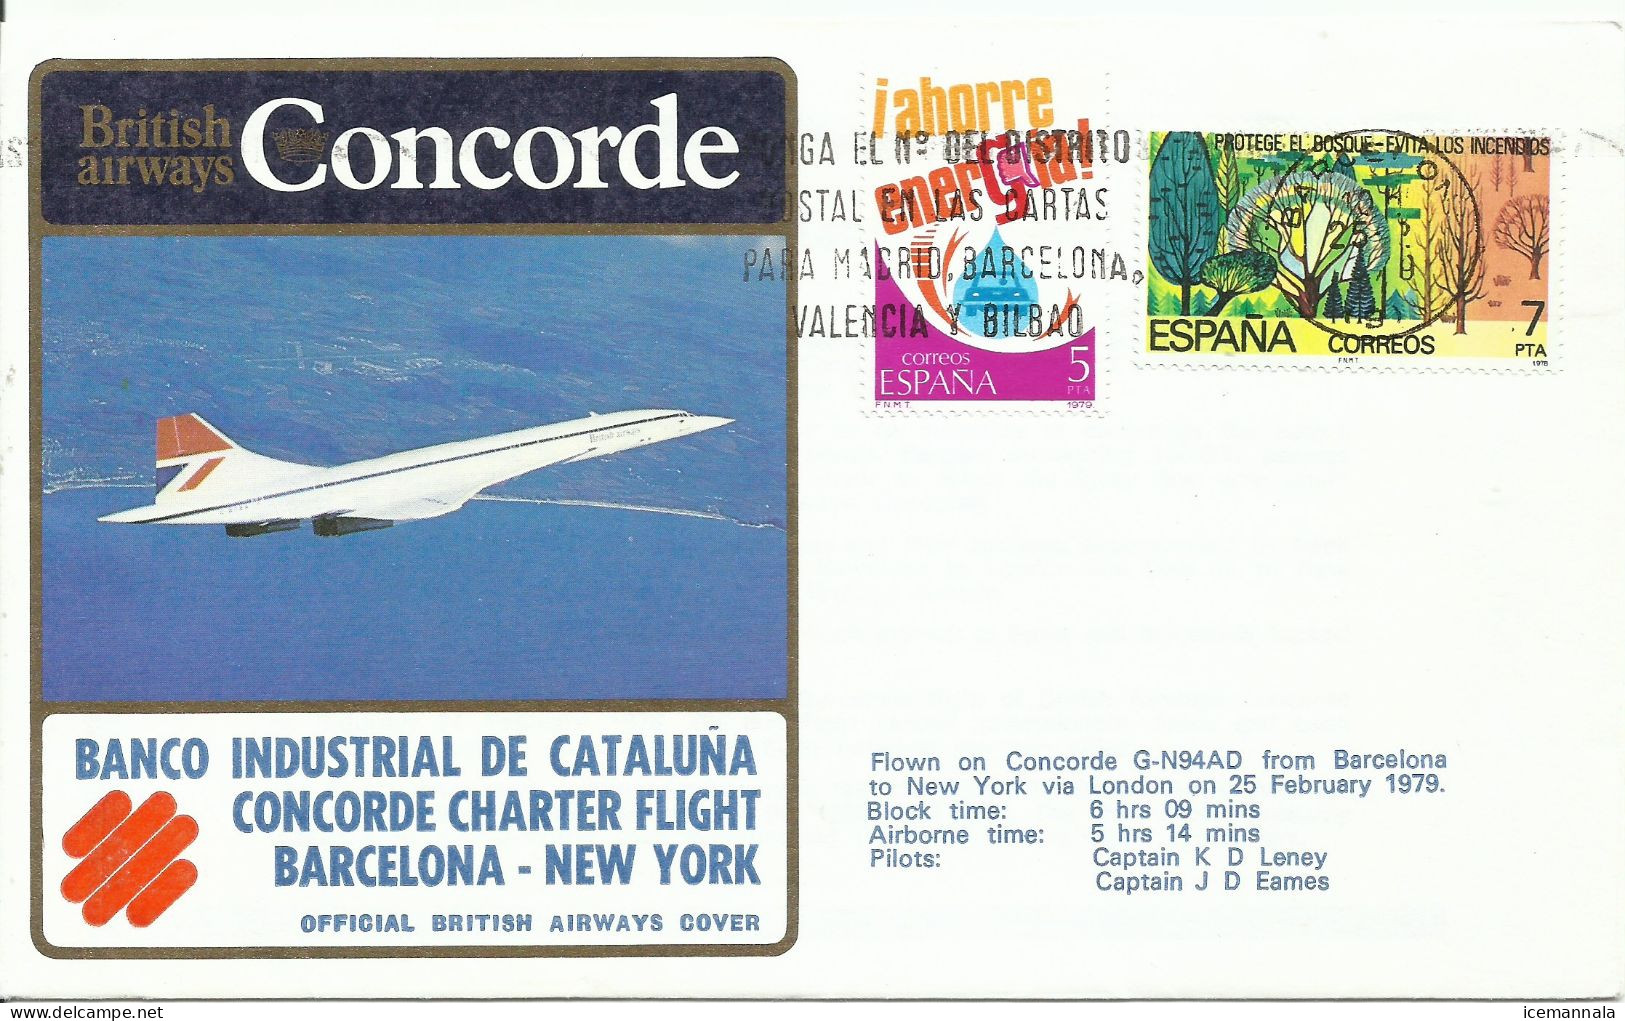 ESPAÑA, SOBRE  CONMEMORATIVO  AÑO  1979 - Covers & Documents